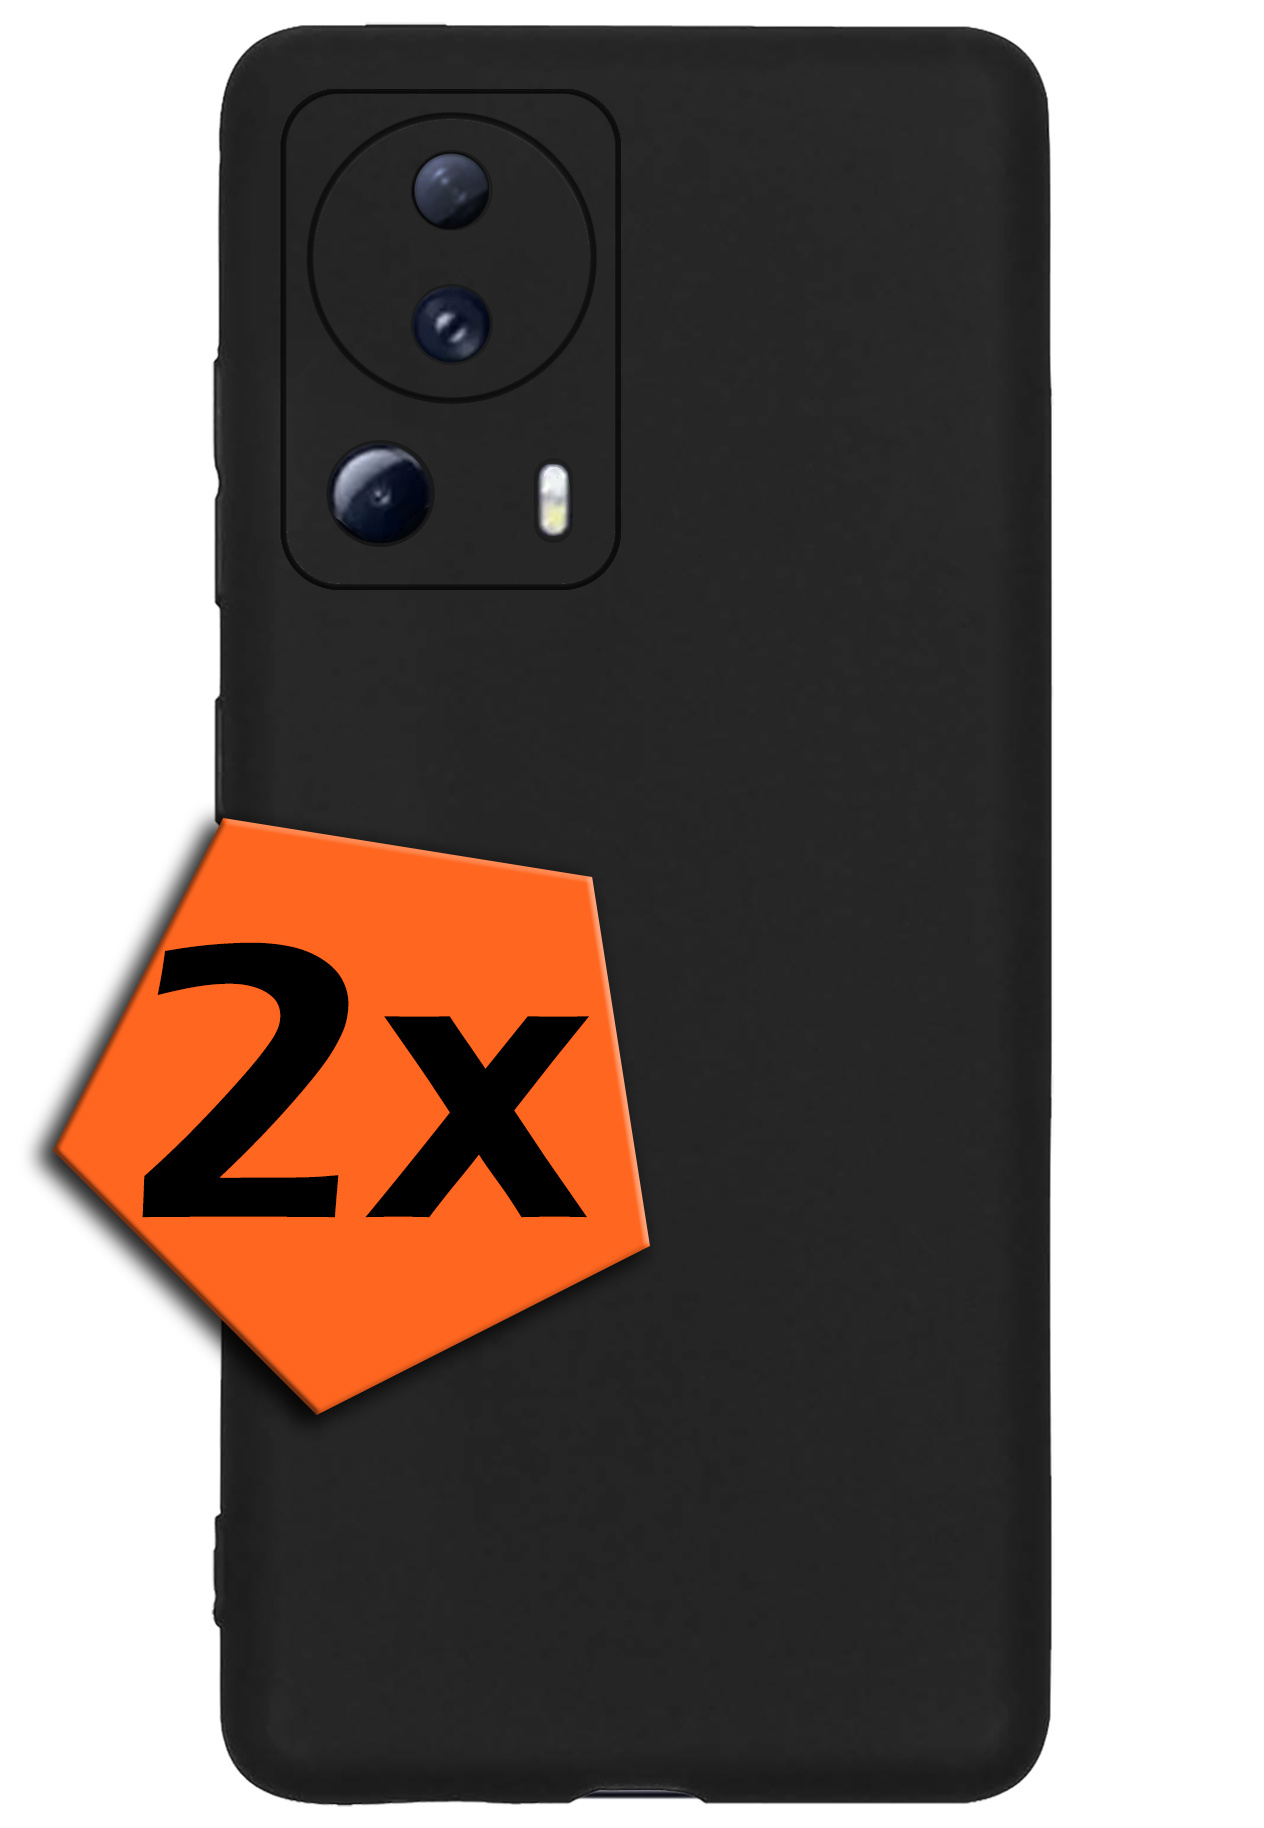 Nomfy Xiaomi 13 Lite Hoesje Siliconen Case Back Cover - Xiaomi 13 Lite Hoes Cover Silicone - Zwart - 2X